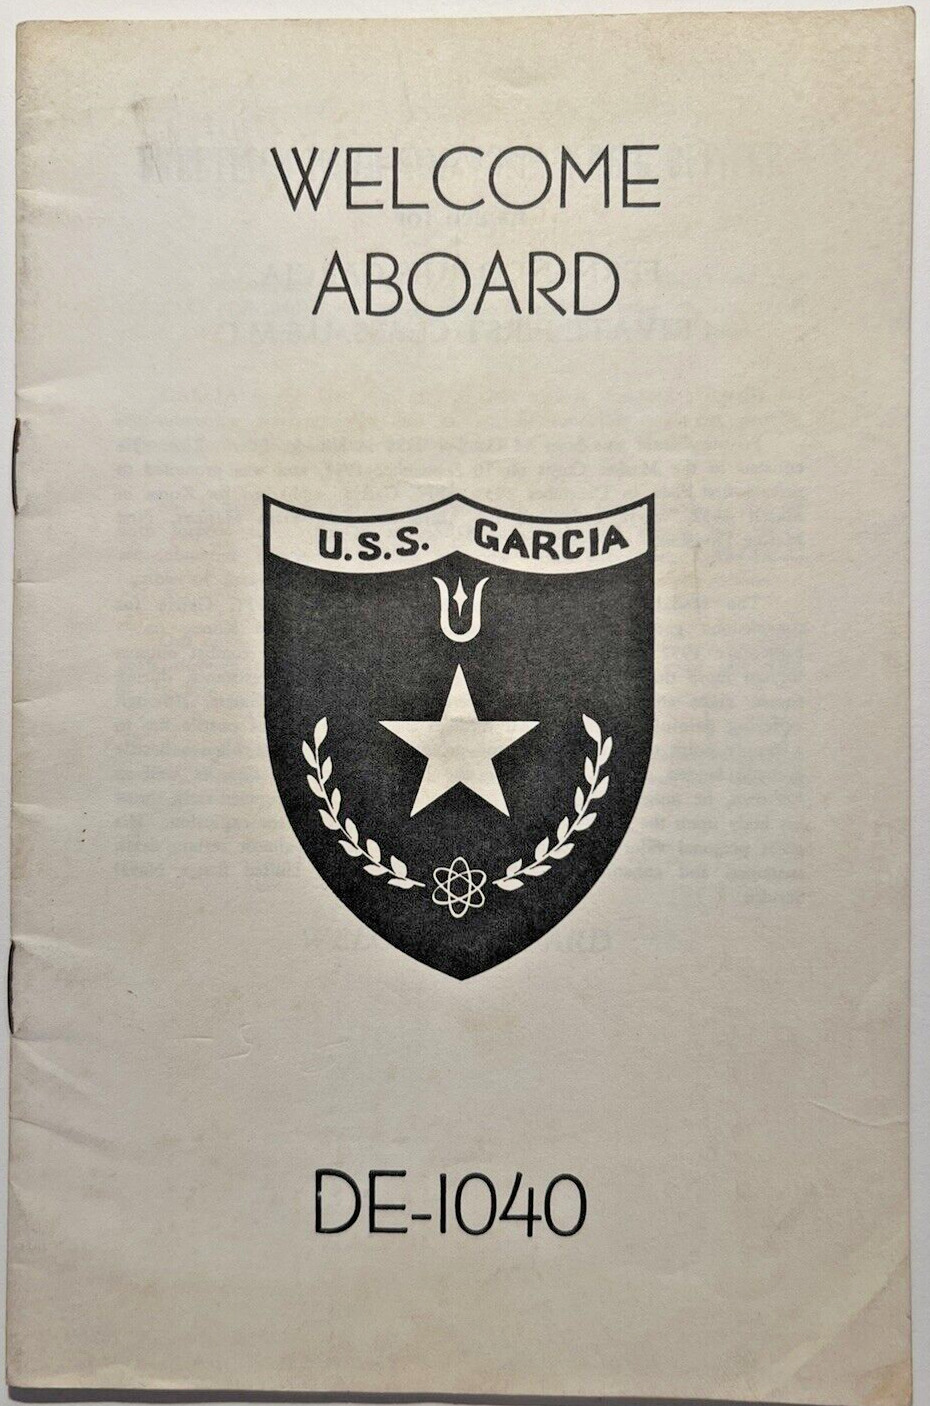 1967 USS GARCIA DE-1040 DESTROYER ESCORT SHIP Welcome Aboard Military Booklet 9E